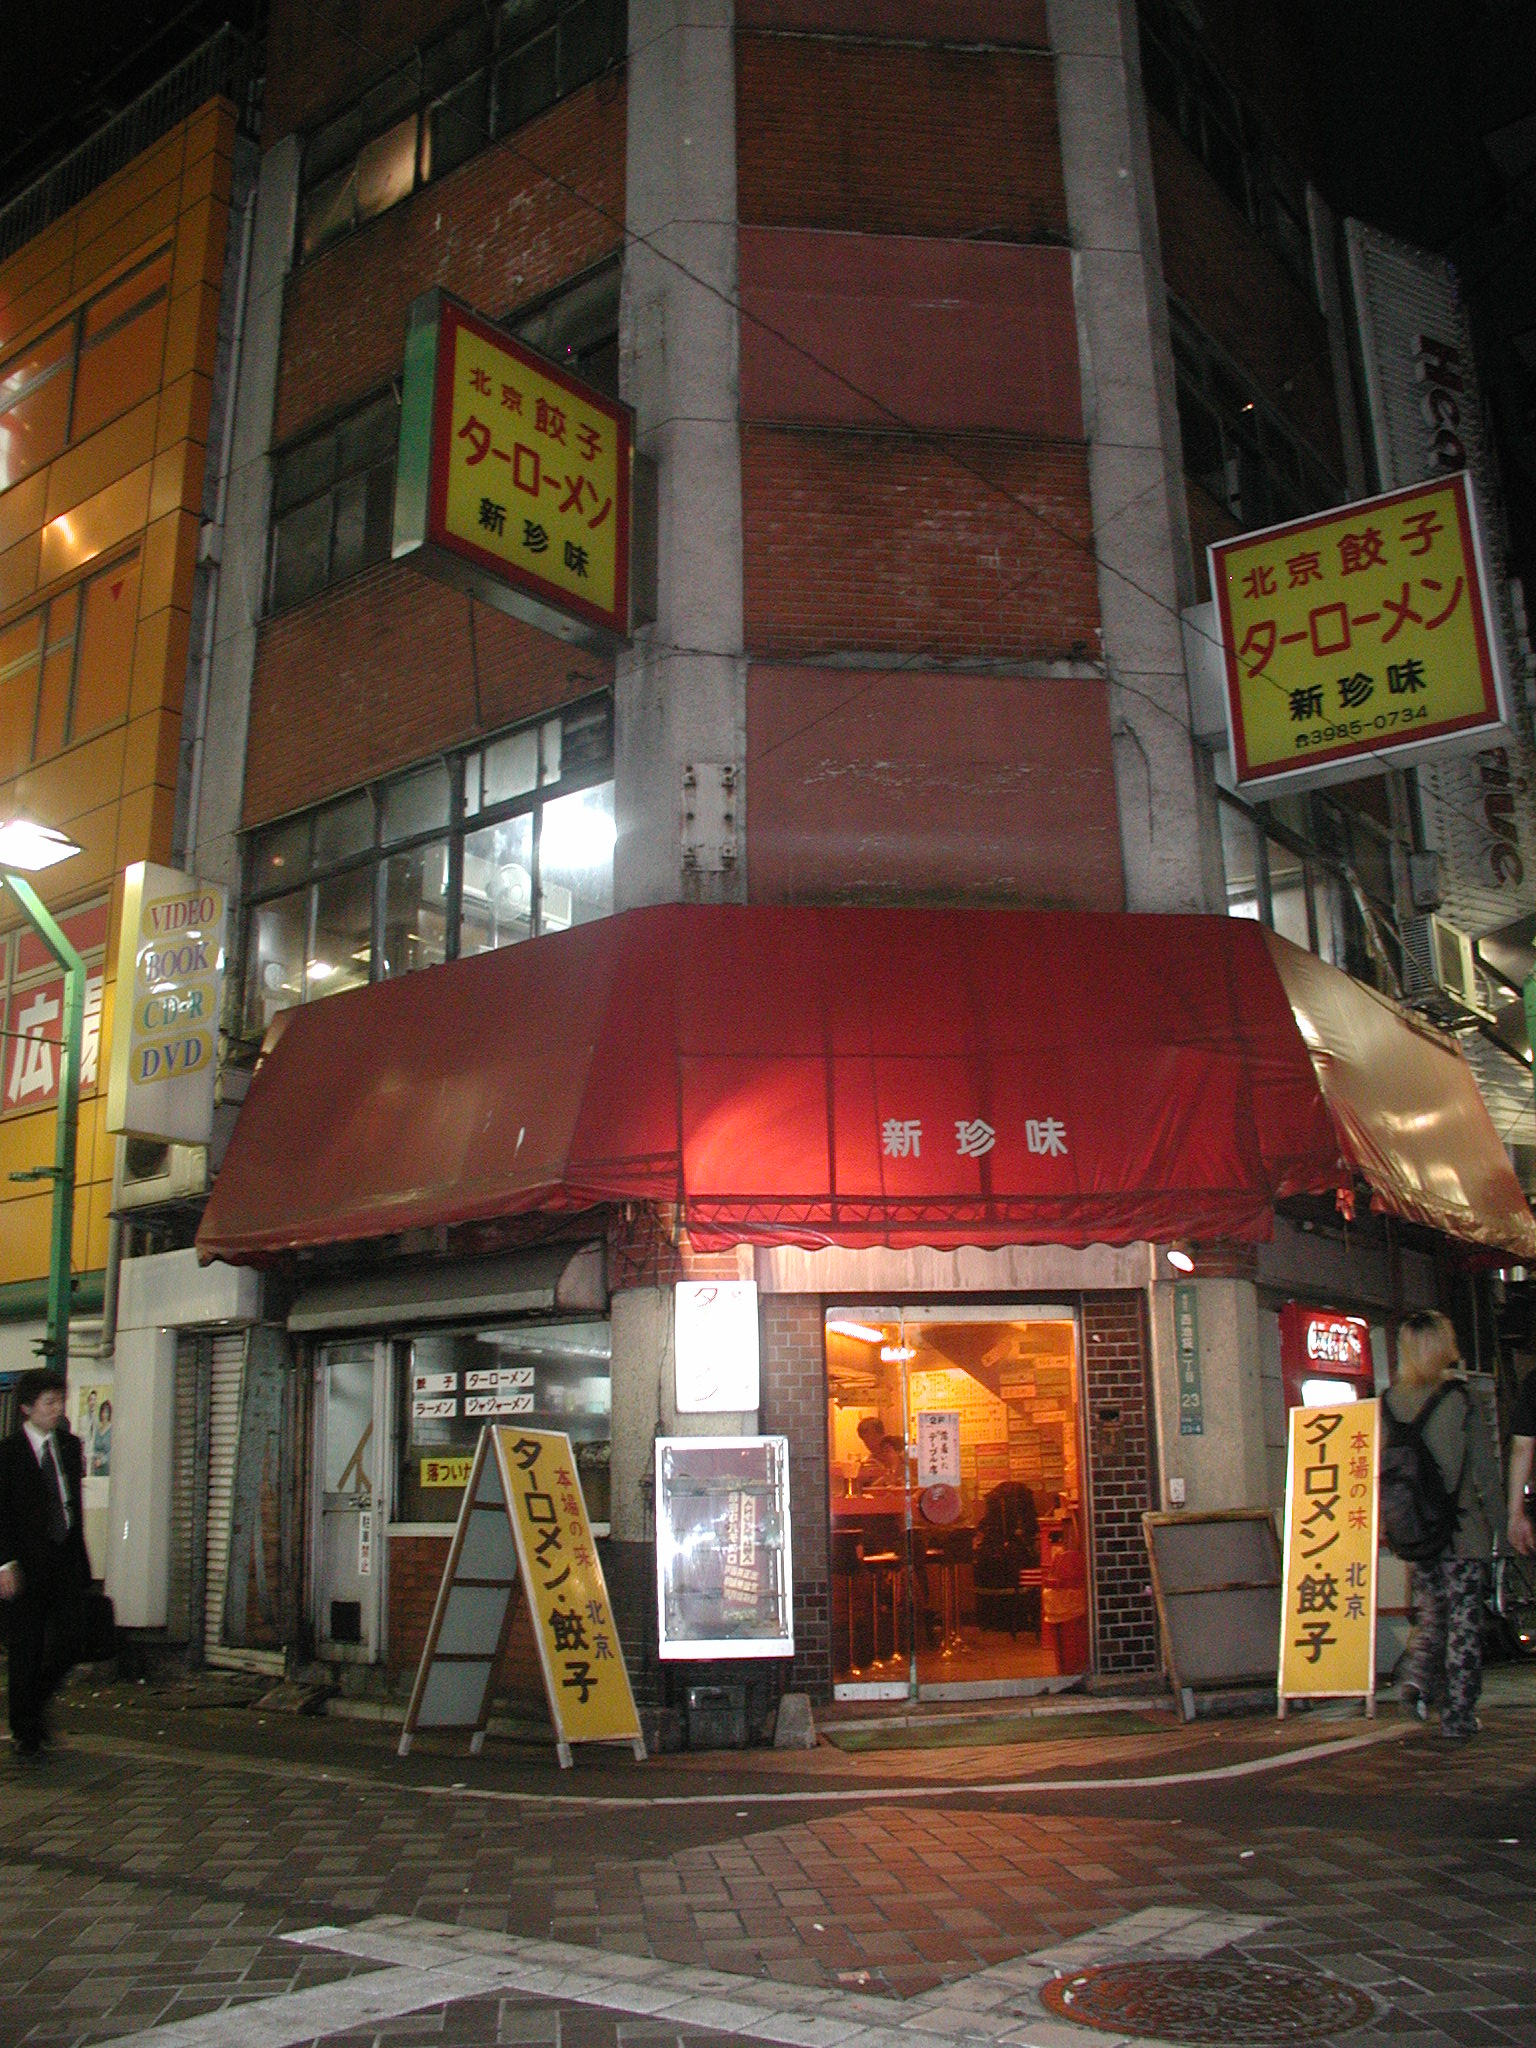 Su Beng's noodle shop in Tokyo, Japan (August 2005)